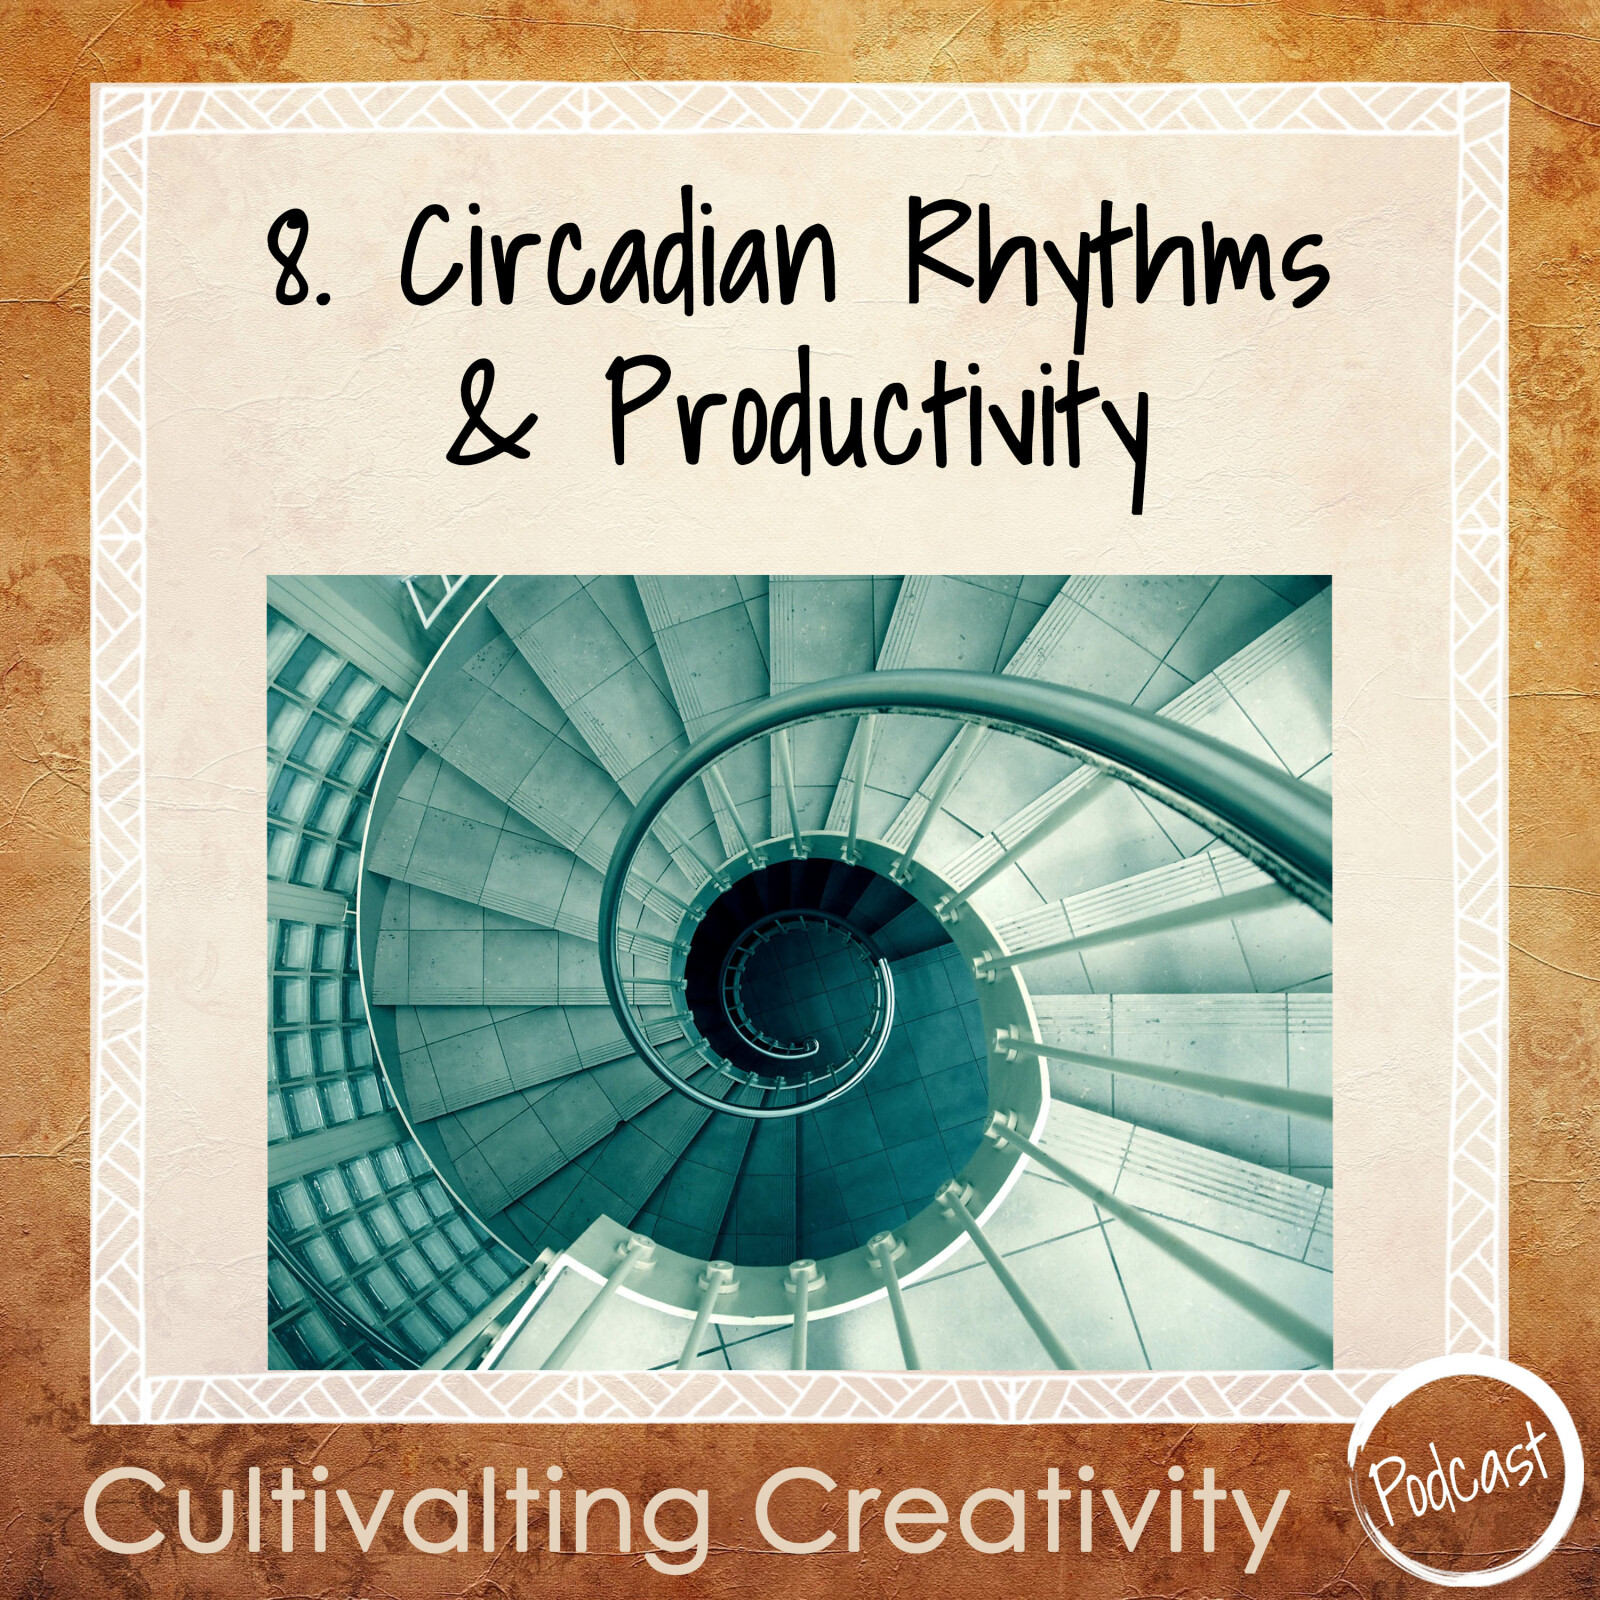 8. Circadian Rhythms & Productivity